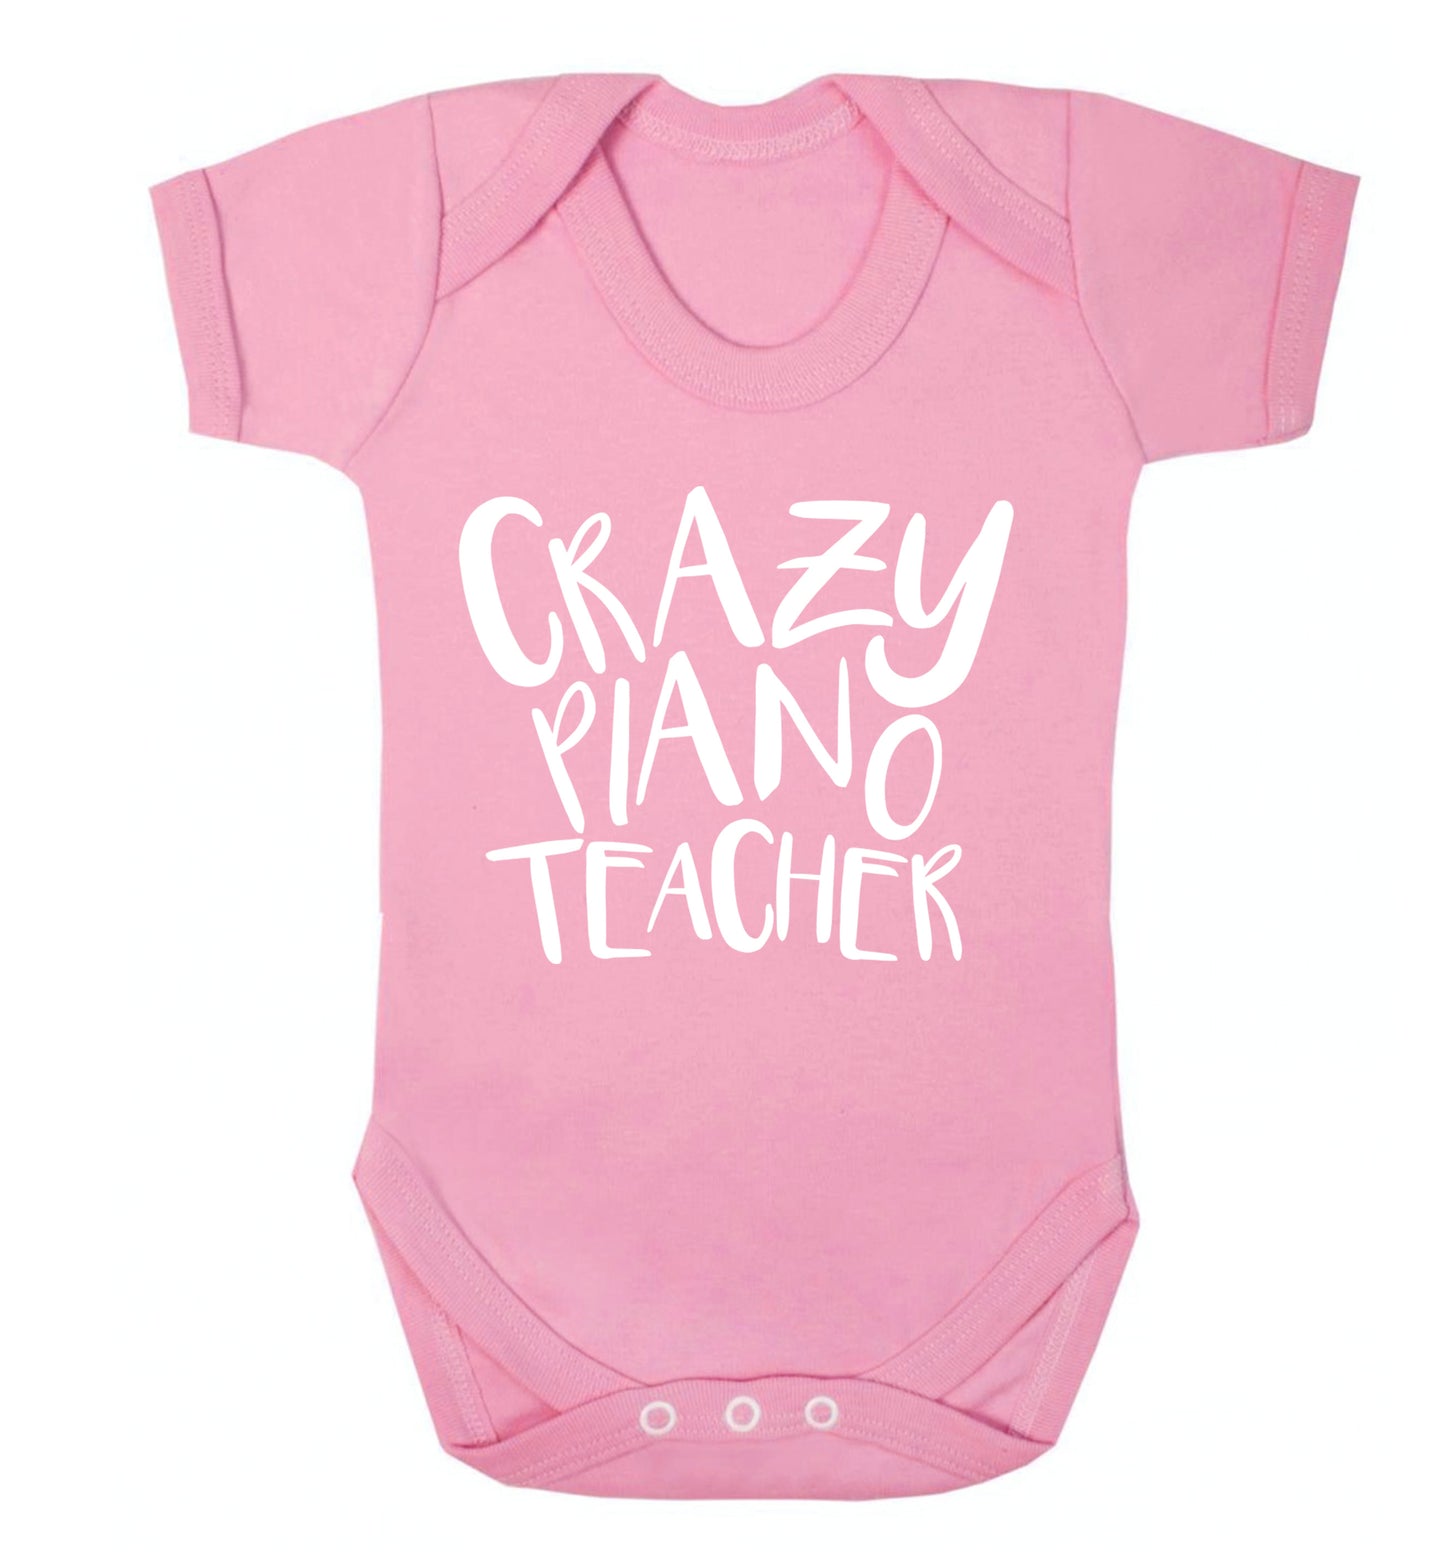 Crazy piano teacher Baby Vest pale pink 18-24 months